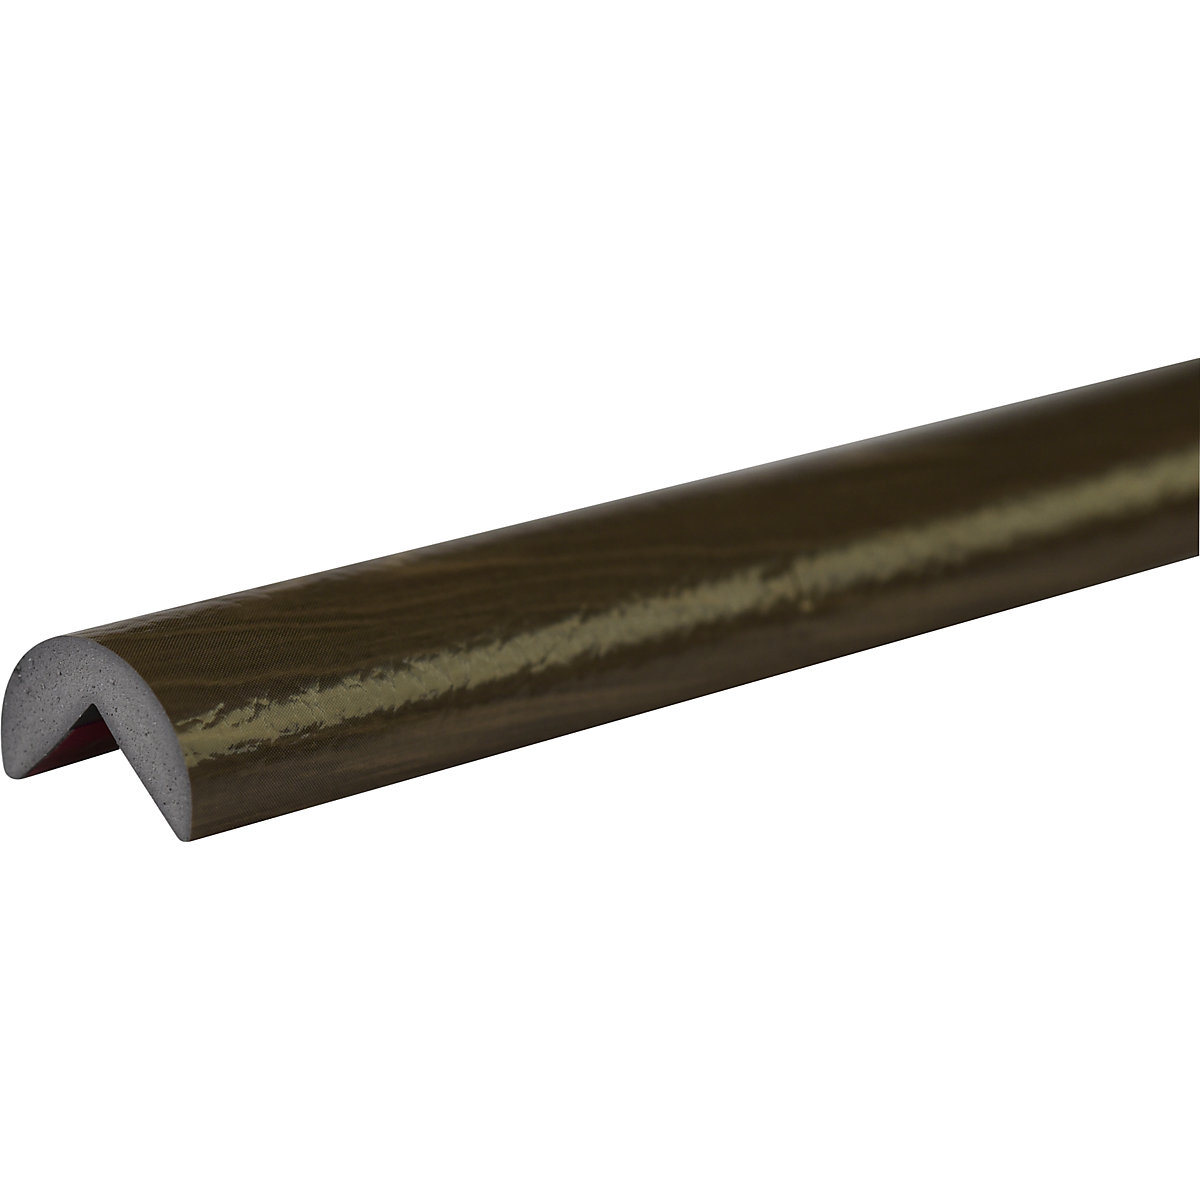 Knuffi®-hoekbescherming – SHG, type A, stuk van 1 m, gecoat hout kaki-27